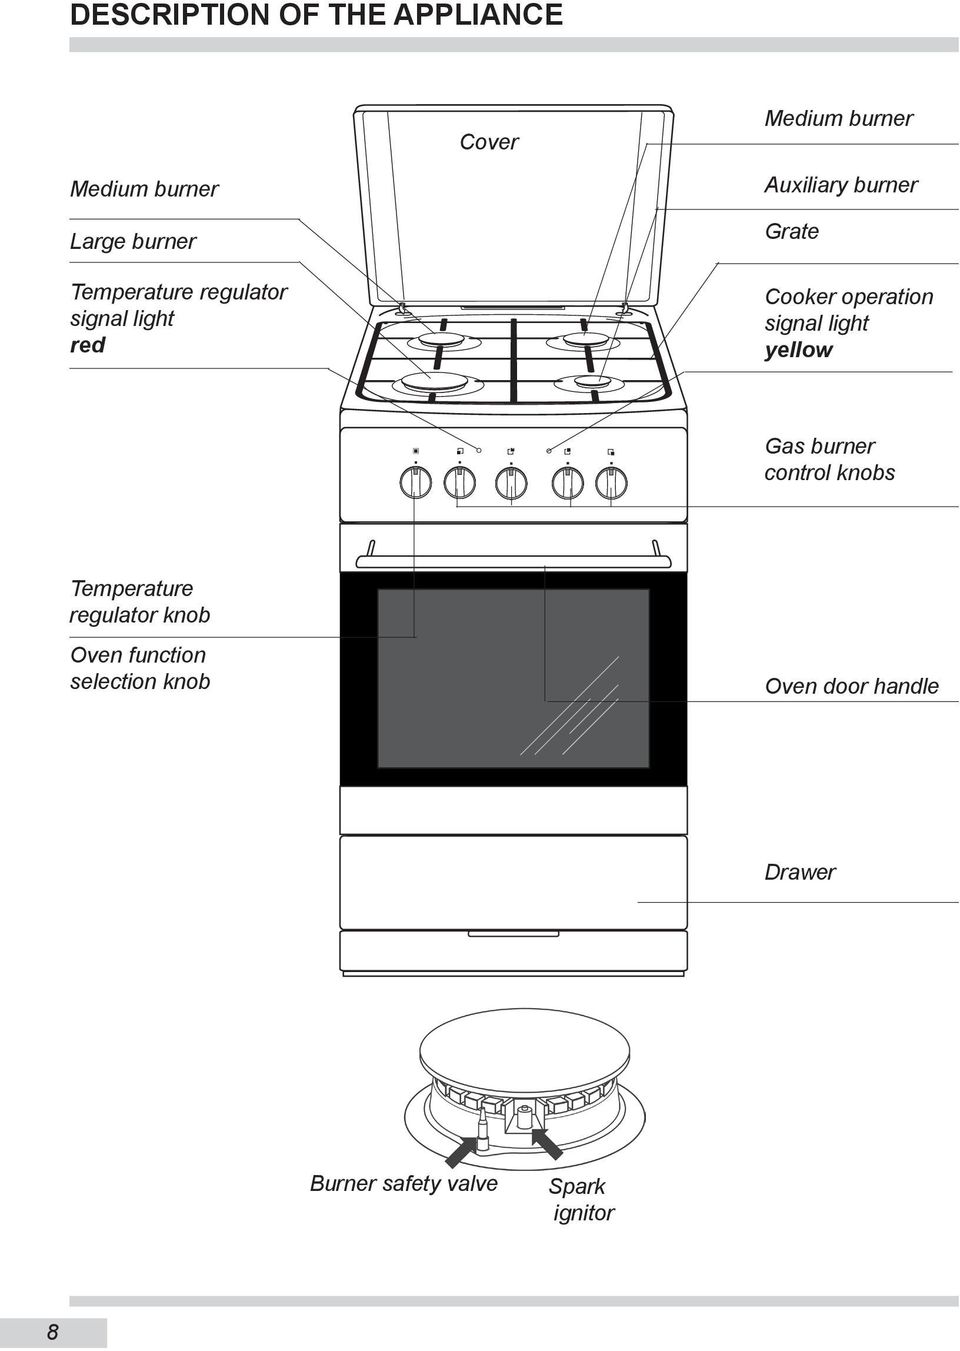 signal light yellow Gas burner control knobs Temperature regulator knob Oven